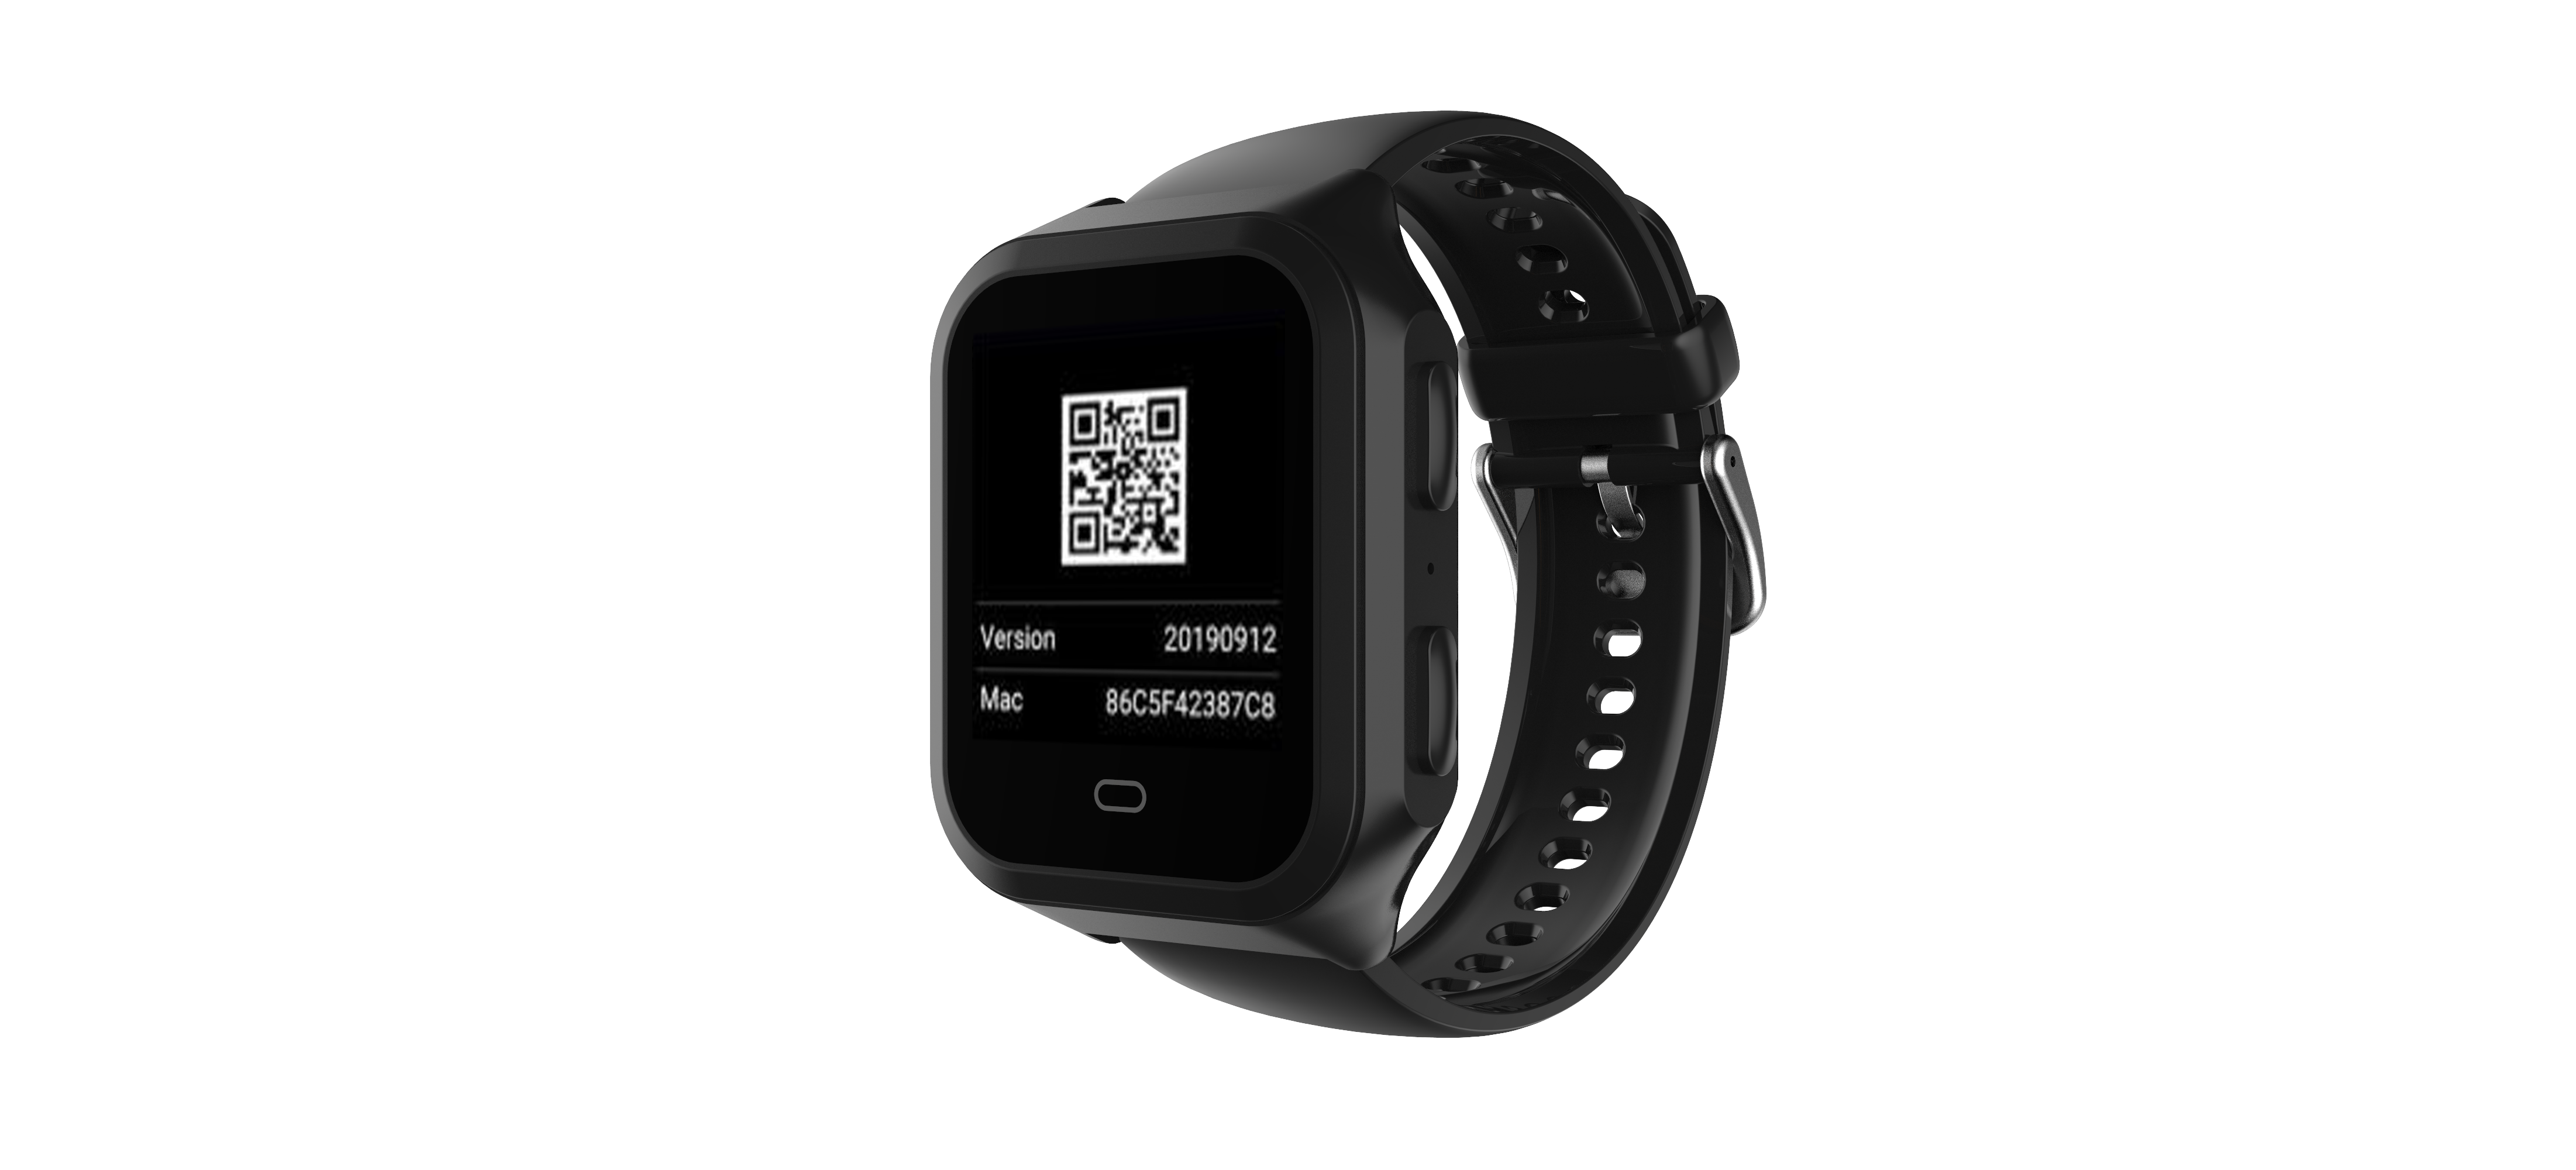 Garmin Announces quatix 7 Pro Watch with Trolling Motor Remote - Wired2Fish